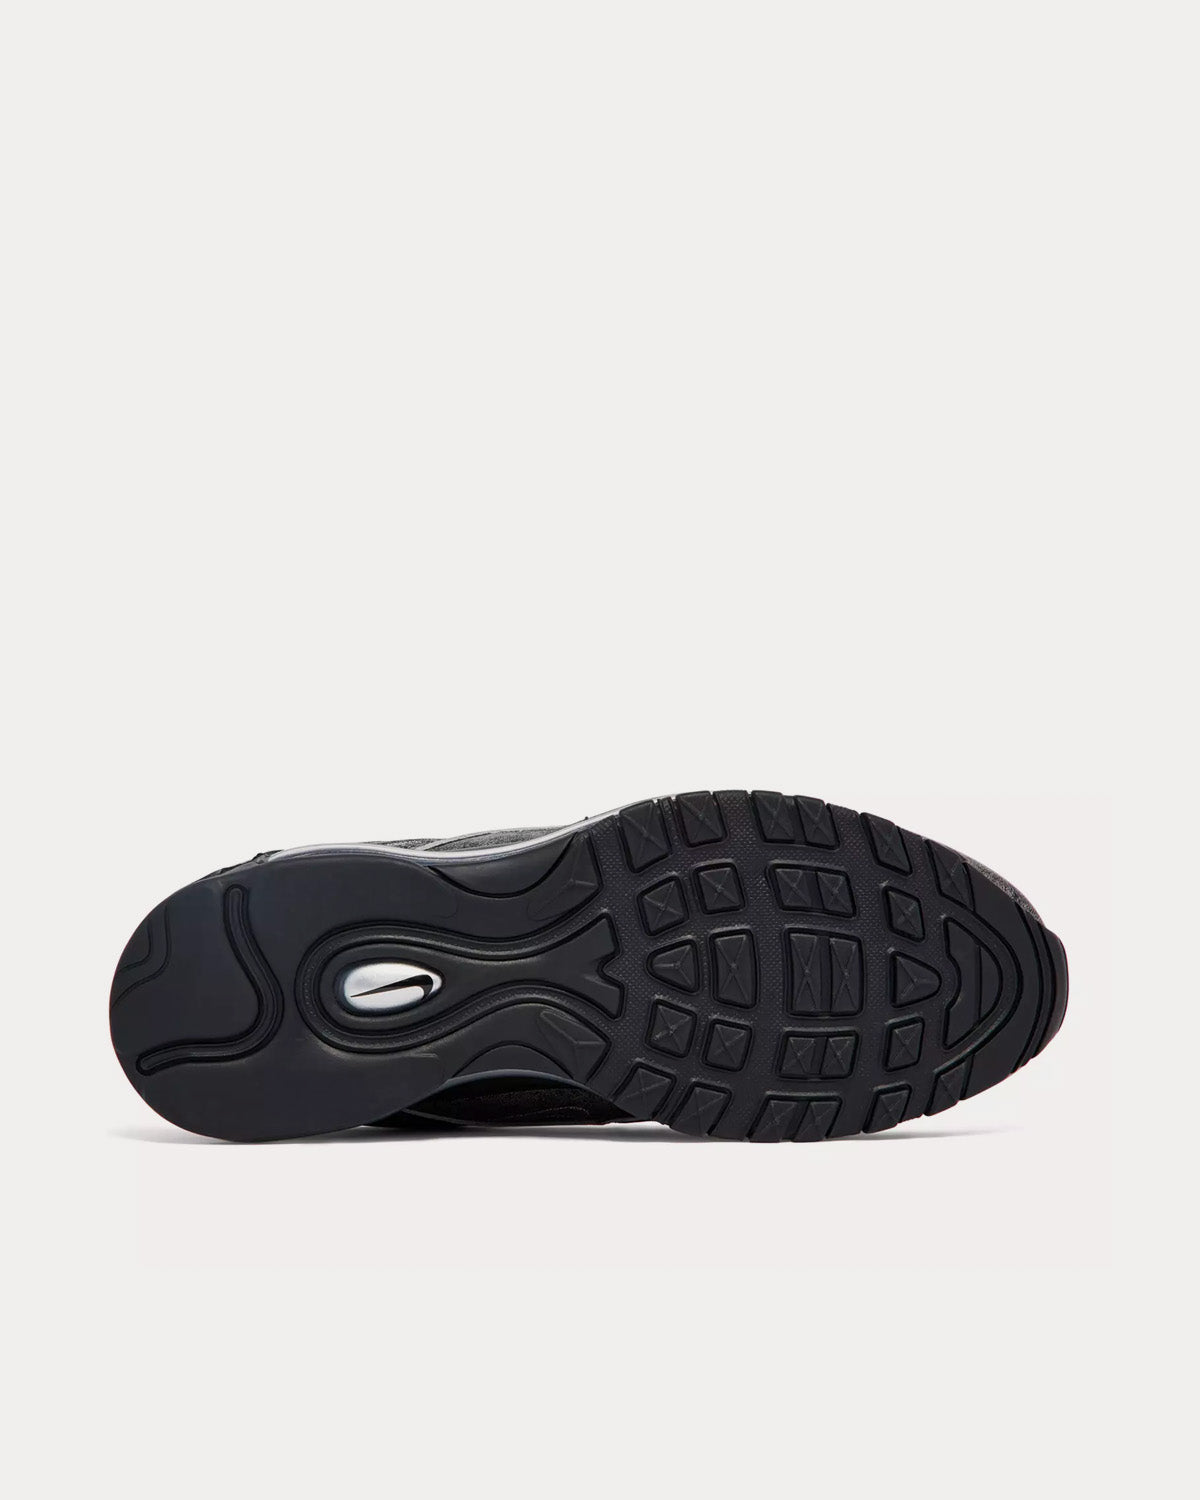 Nike x Comme des Garçons - Air Max 97 Black Low Top Sneakers